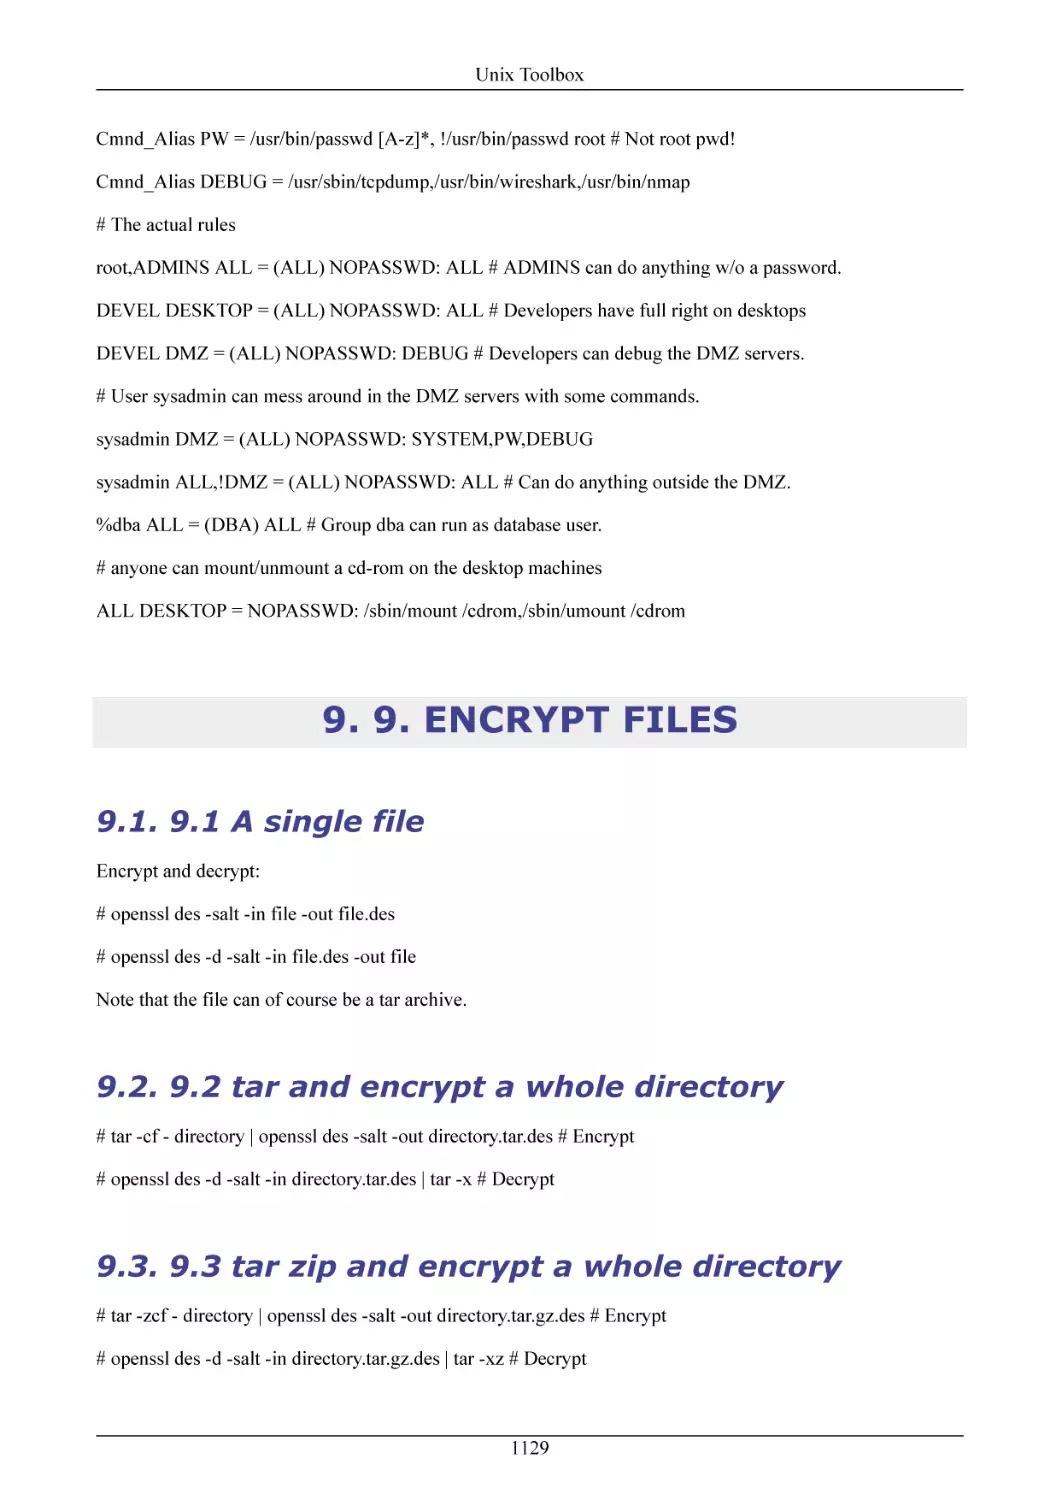 9. ENCRYPT FILES
9.1 A single file
9.2 tar and encrypt a whole directory
9.3 tar zip and encrypt a whole directory